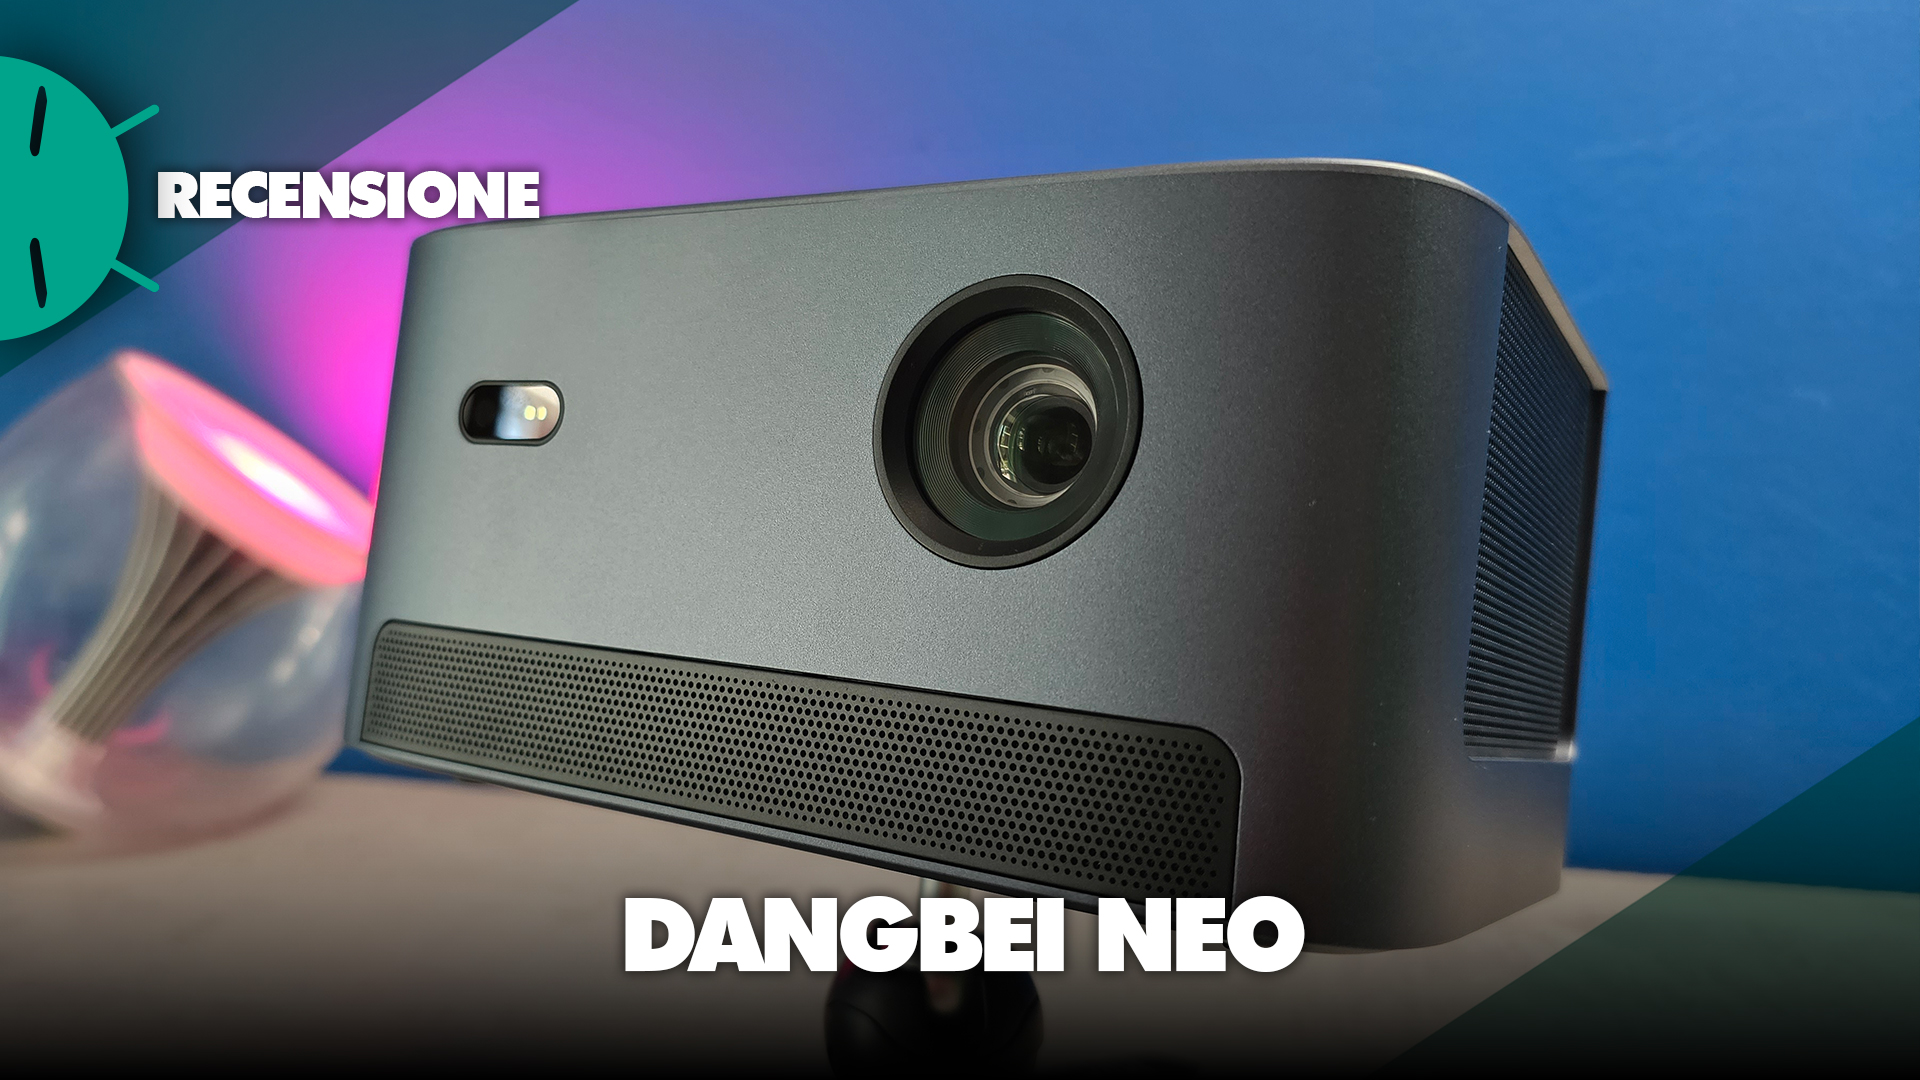 Dangbei Neo Mini Portable 1080p Projector with Native Netflix